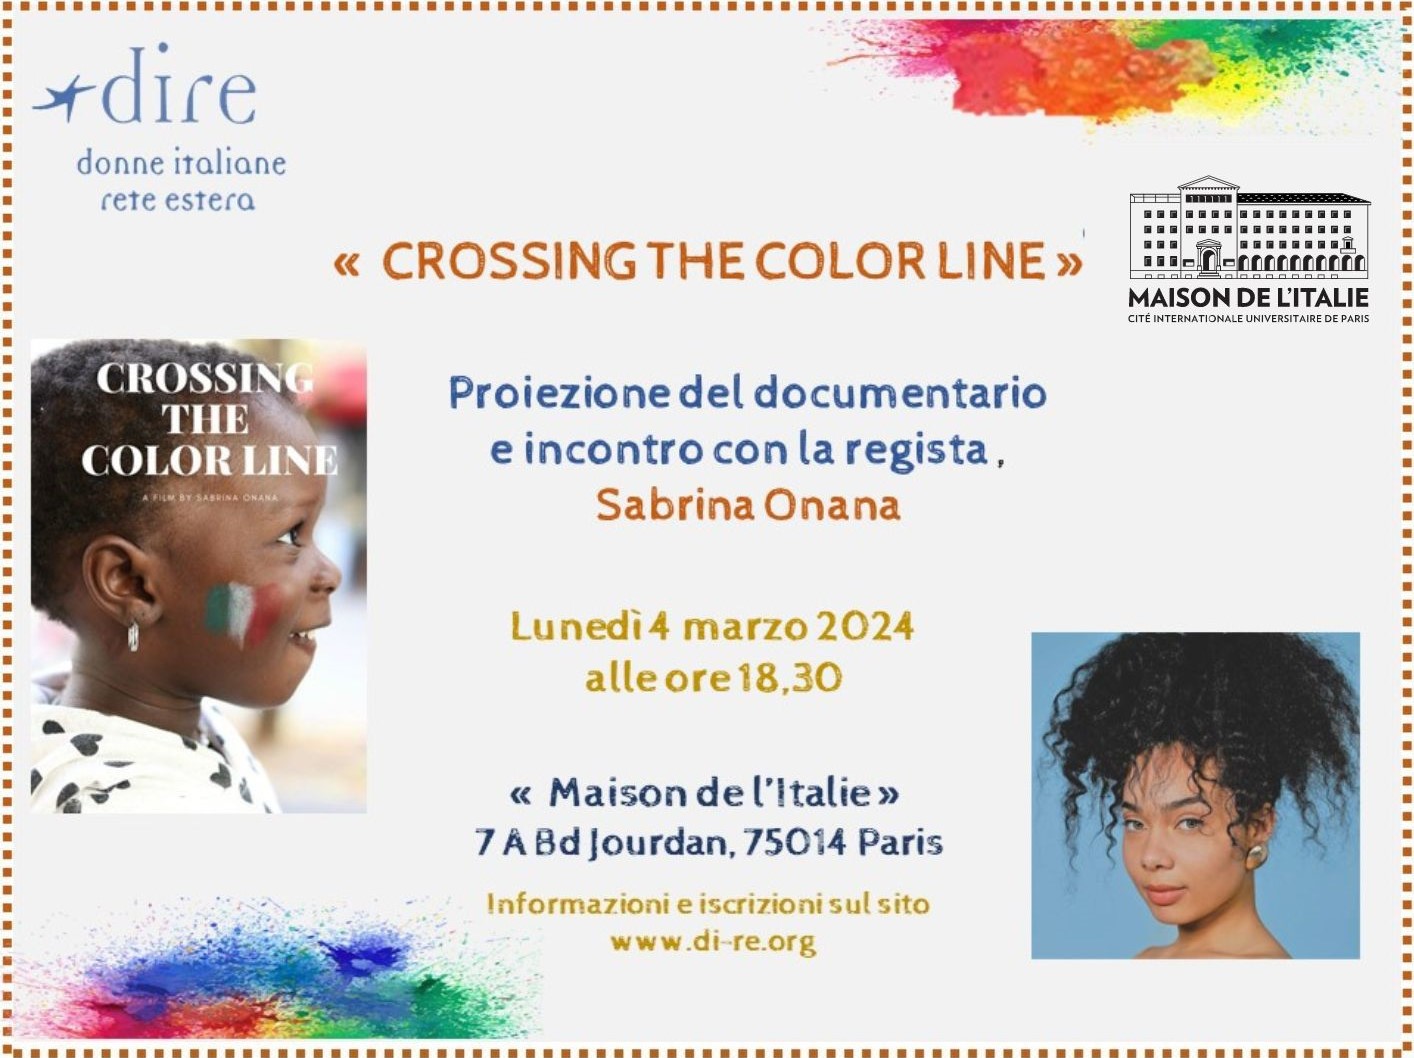 Crossing the color line – Sabrina Onana